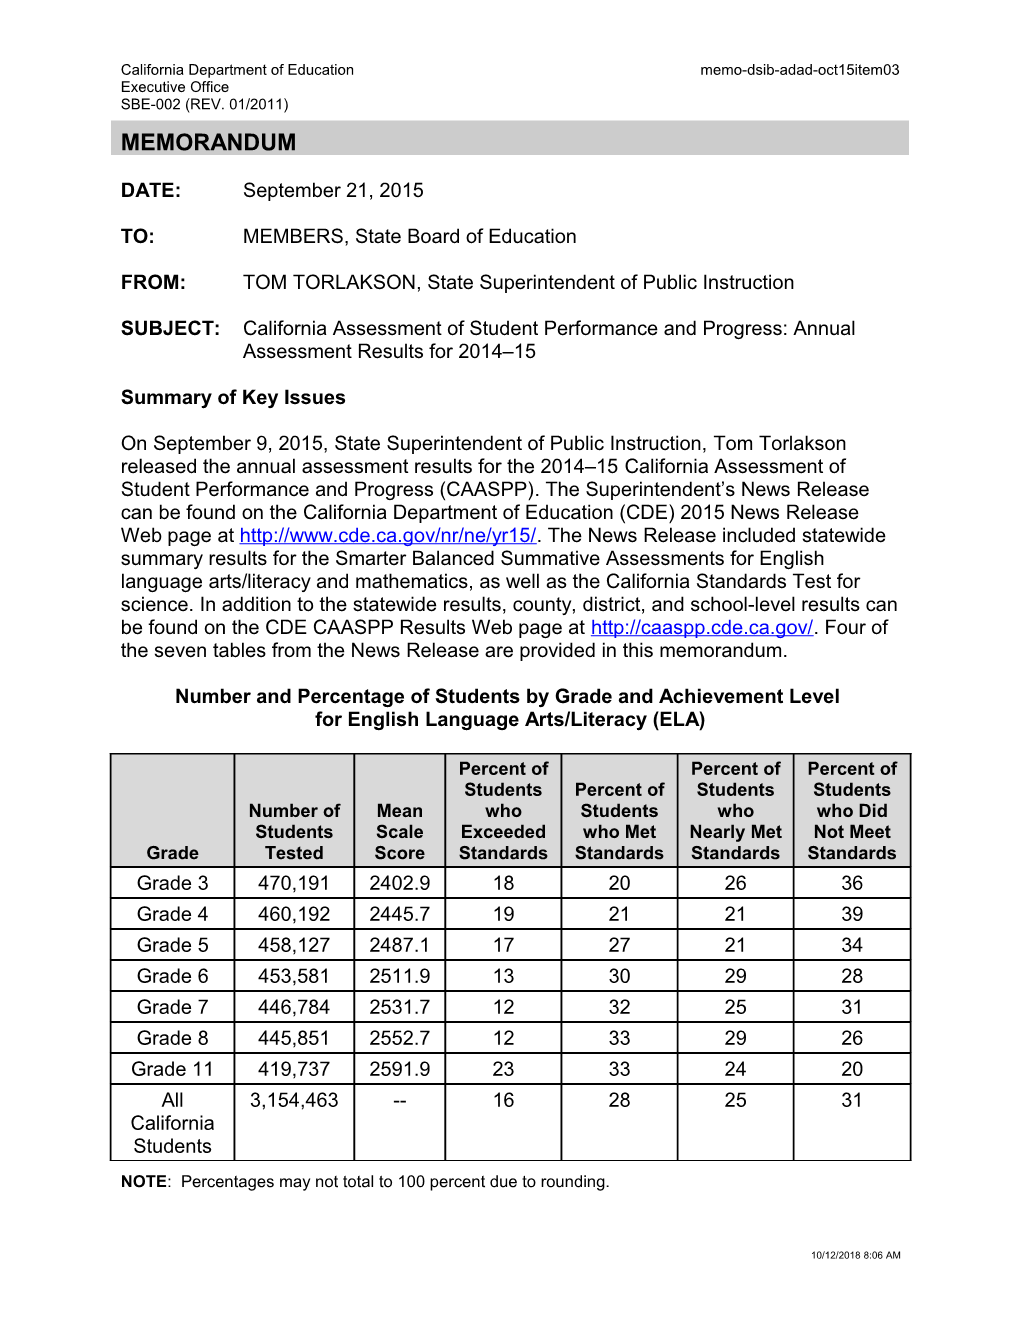 October 2015 Memo DSIB ADAD Item 03 - Information Memorandum (CA State Board of Education)